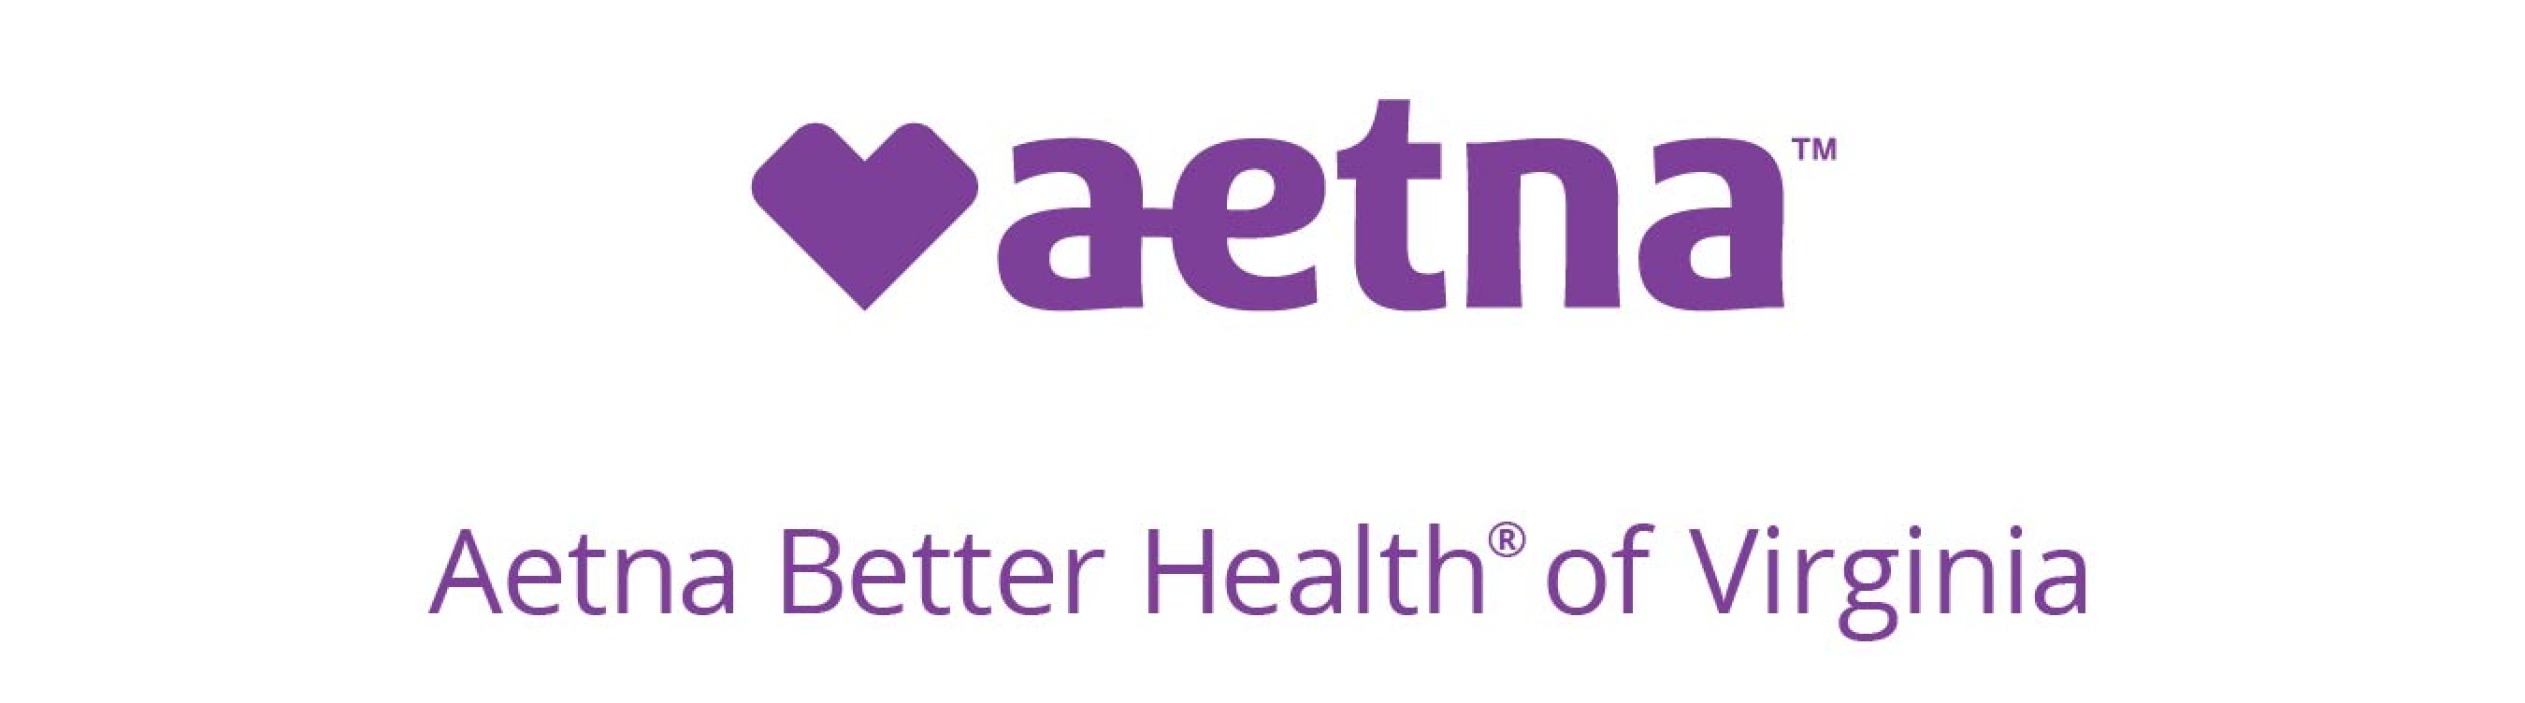 Aetna Better Health of Virginia logo